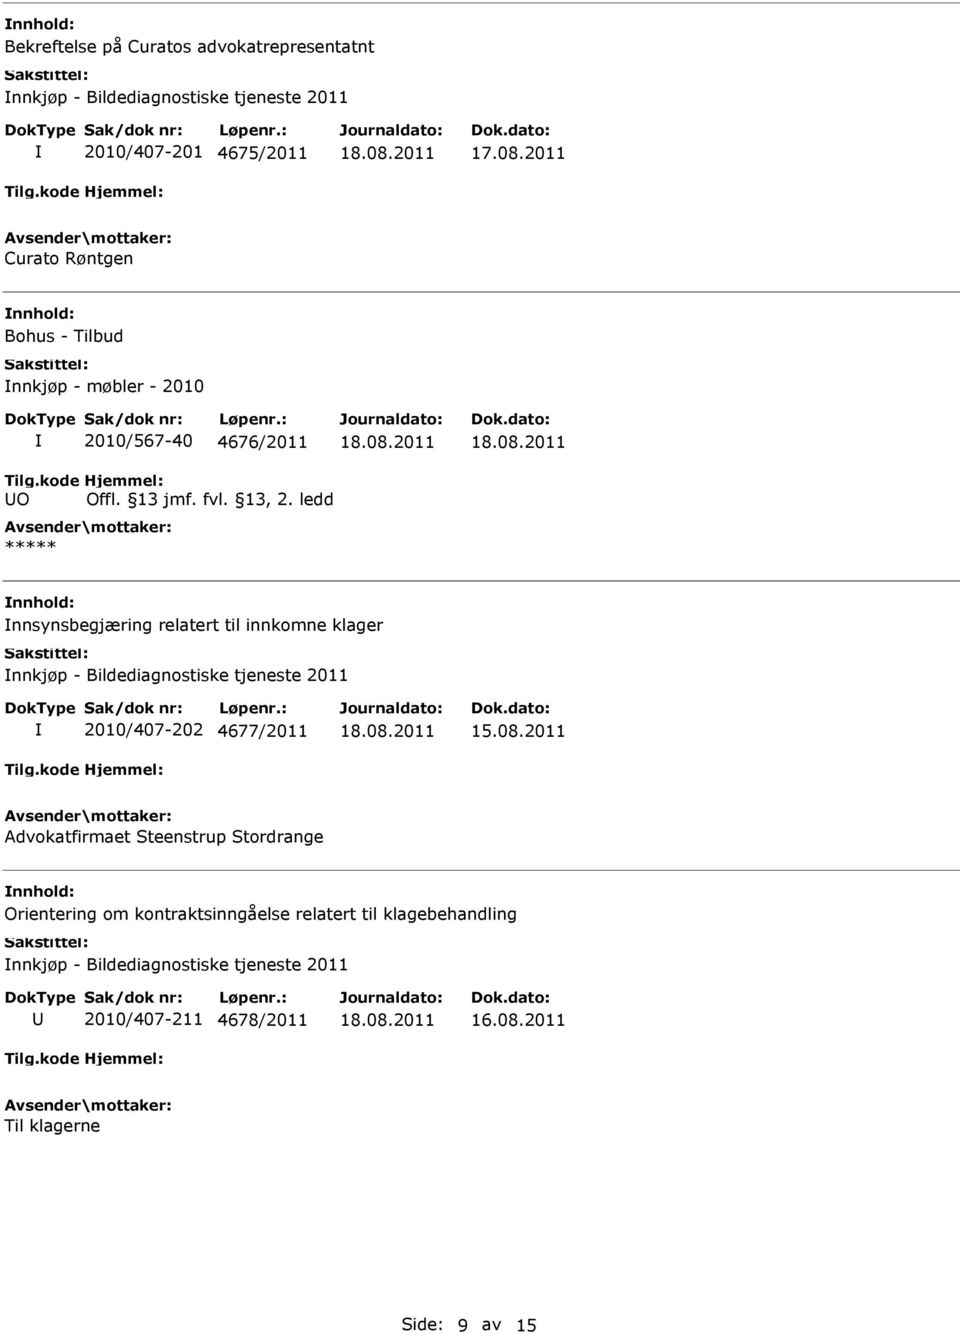 klager nnkjøp - Bildediagnostiske tjeneste 2011 2010/407-202 4677/2011 15.08.